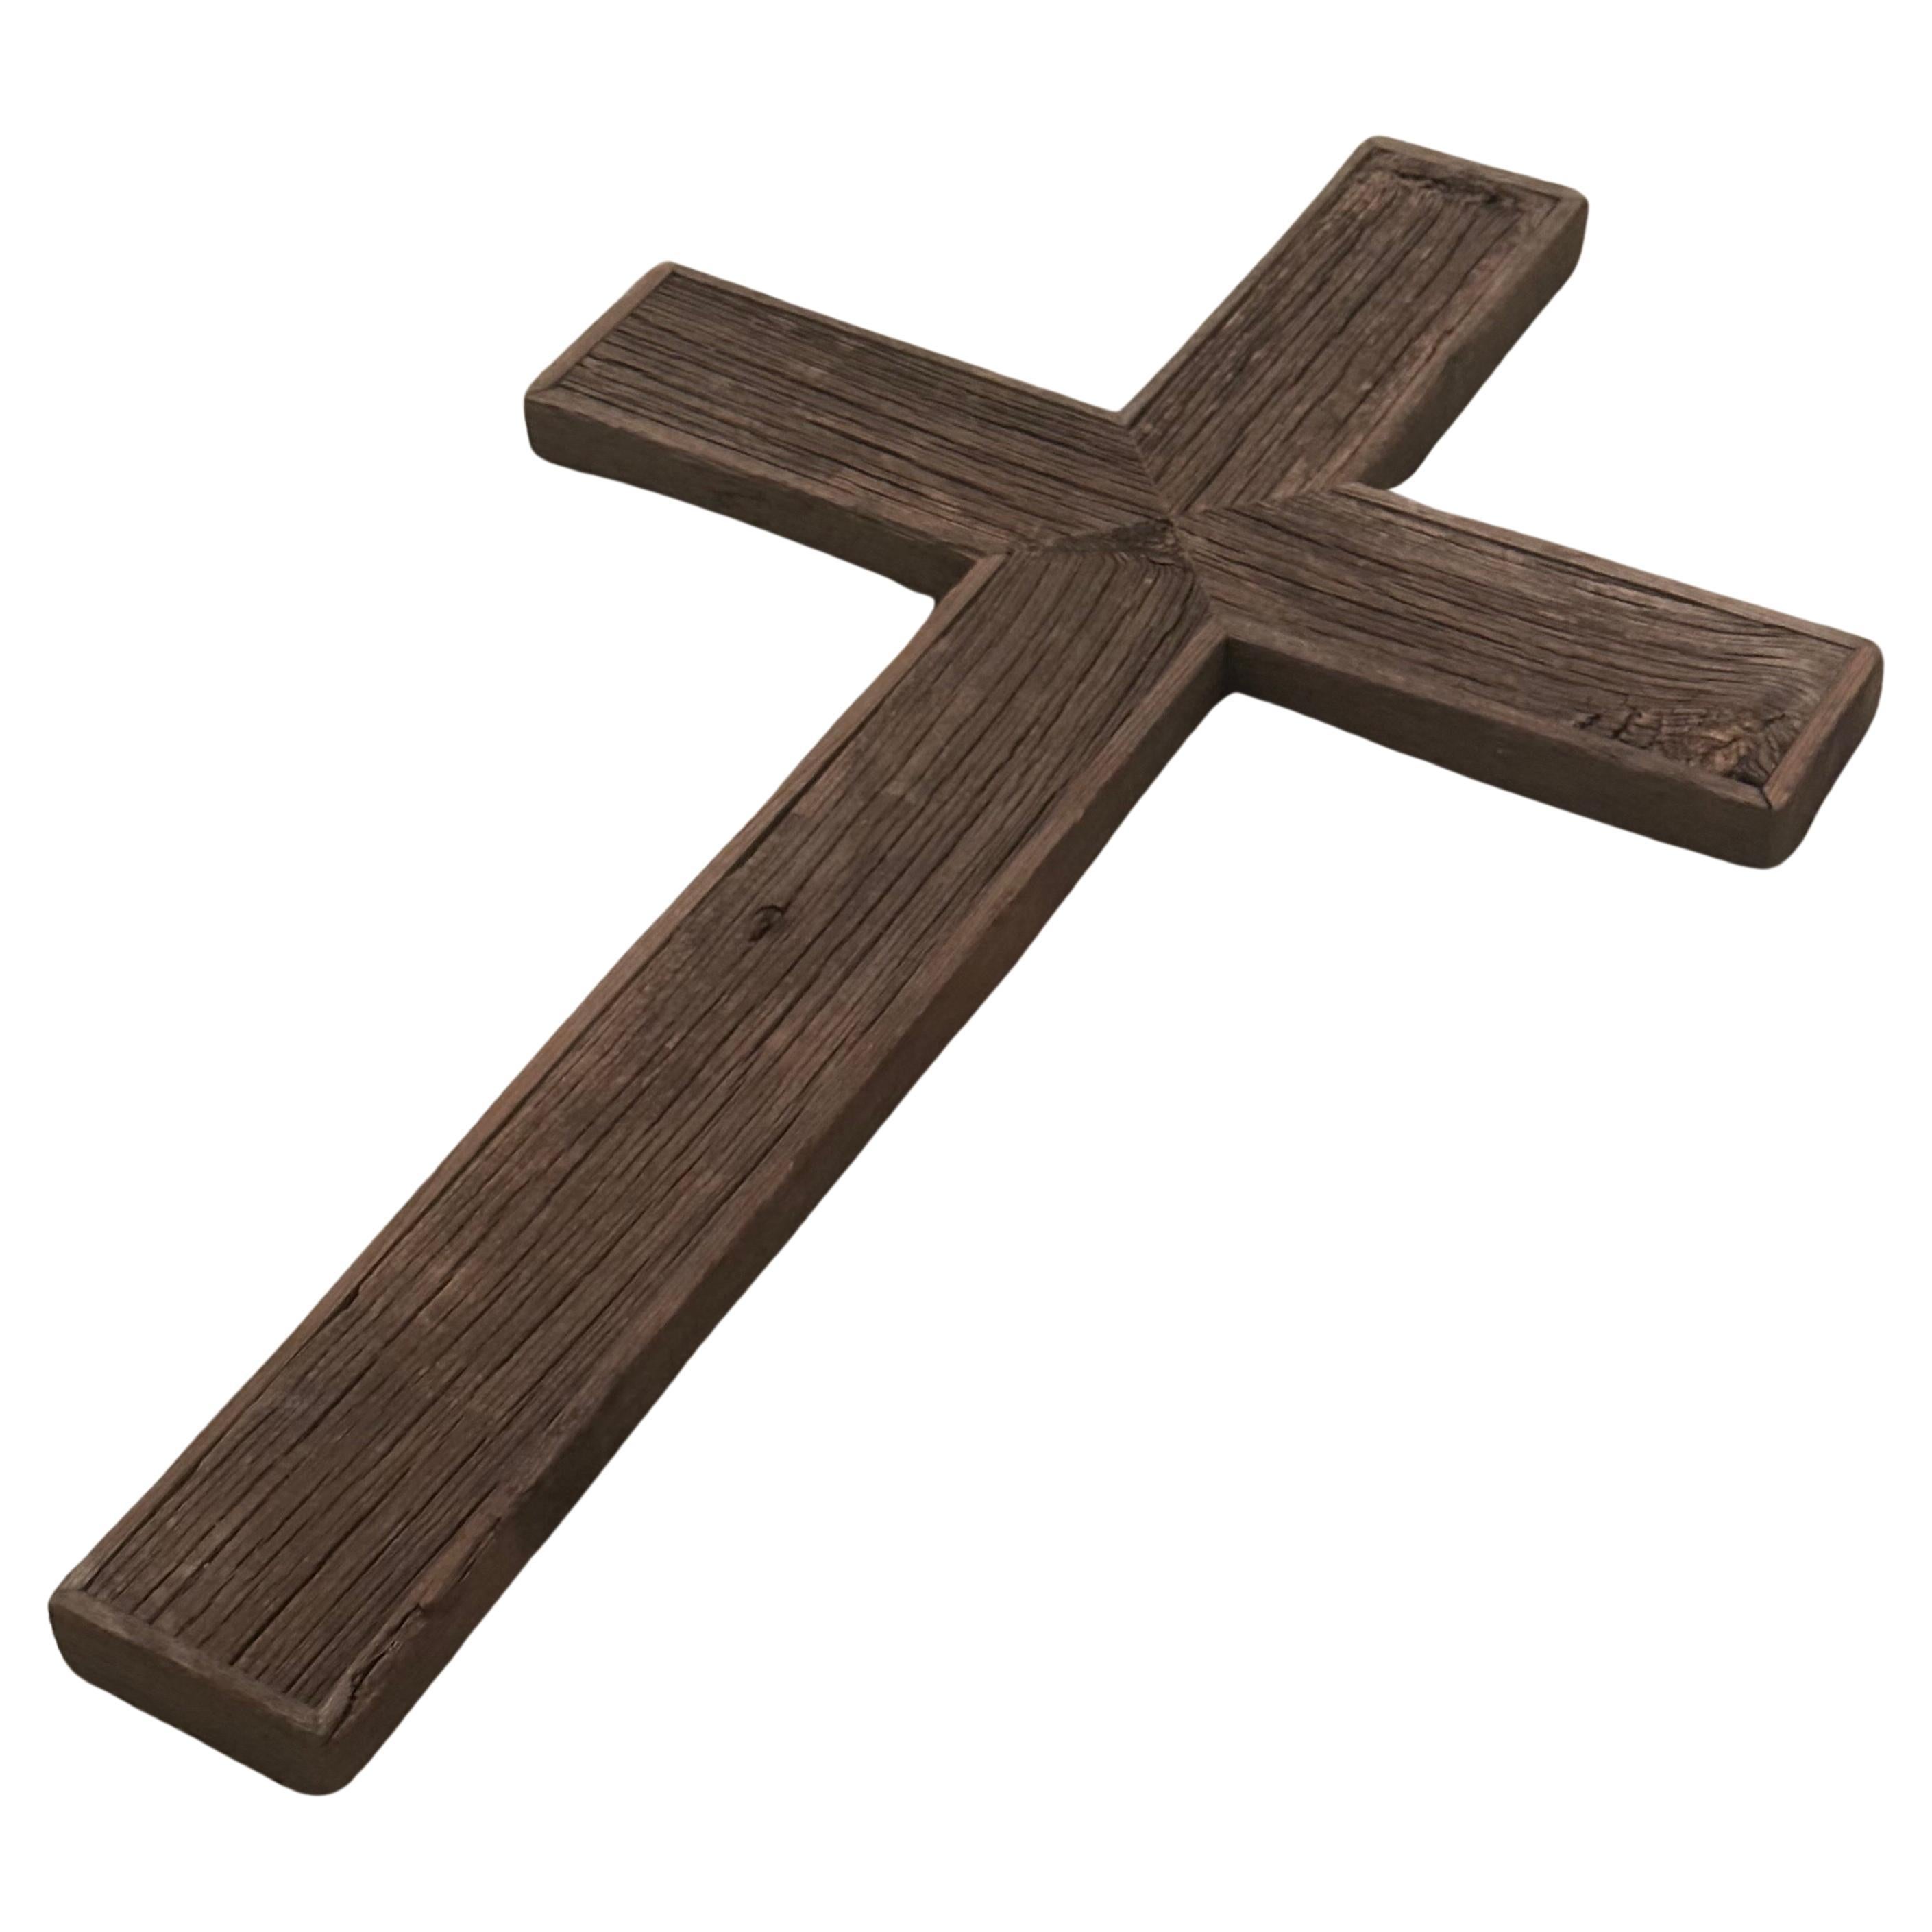 Großes rustikales Kreuz aus Treibholz, ca. 2000er Jahre. Das Stück misst 15 